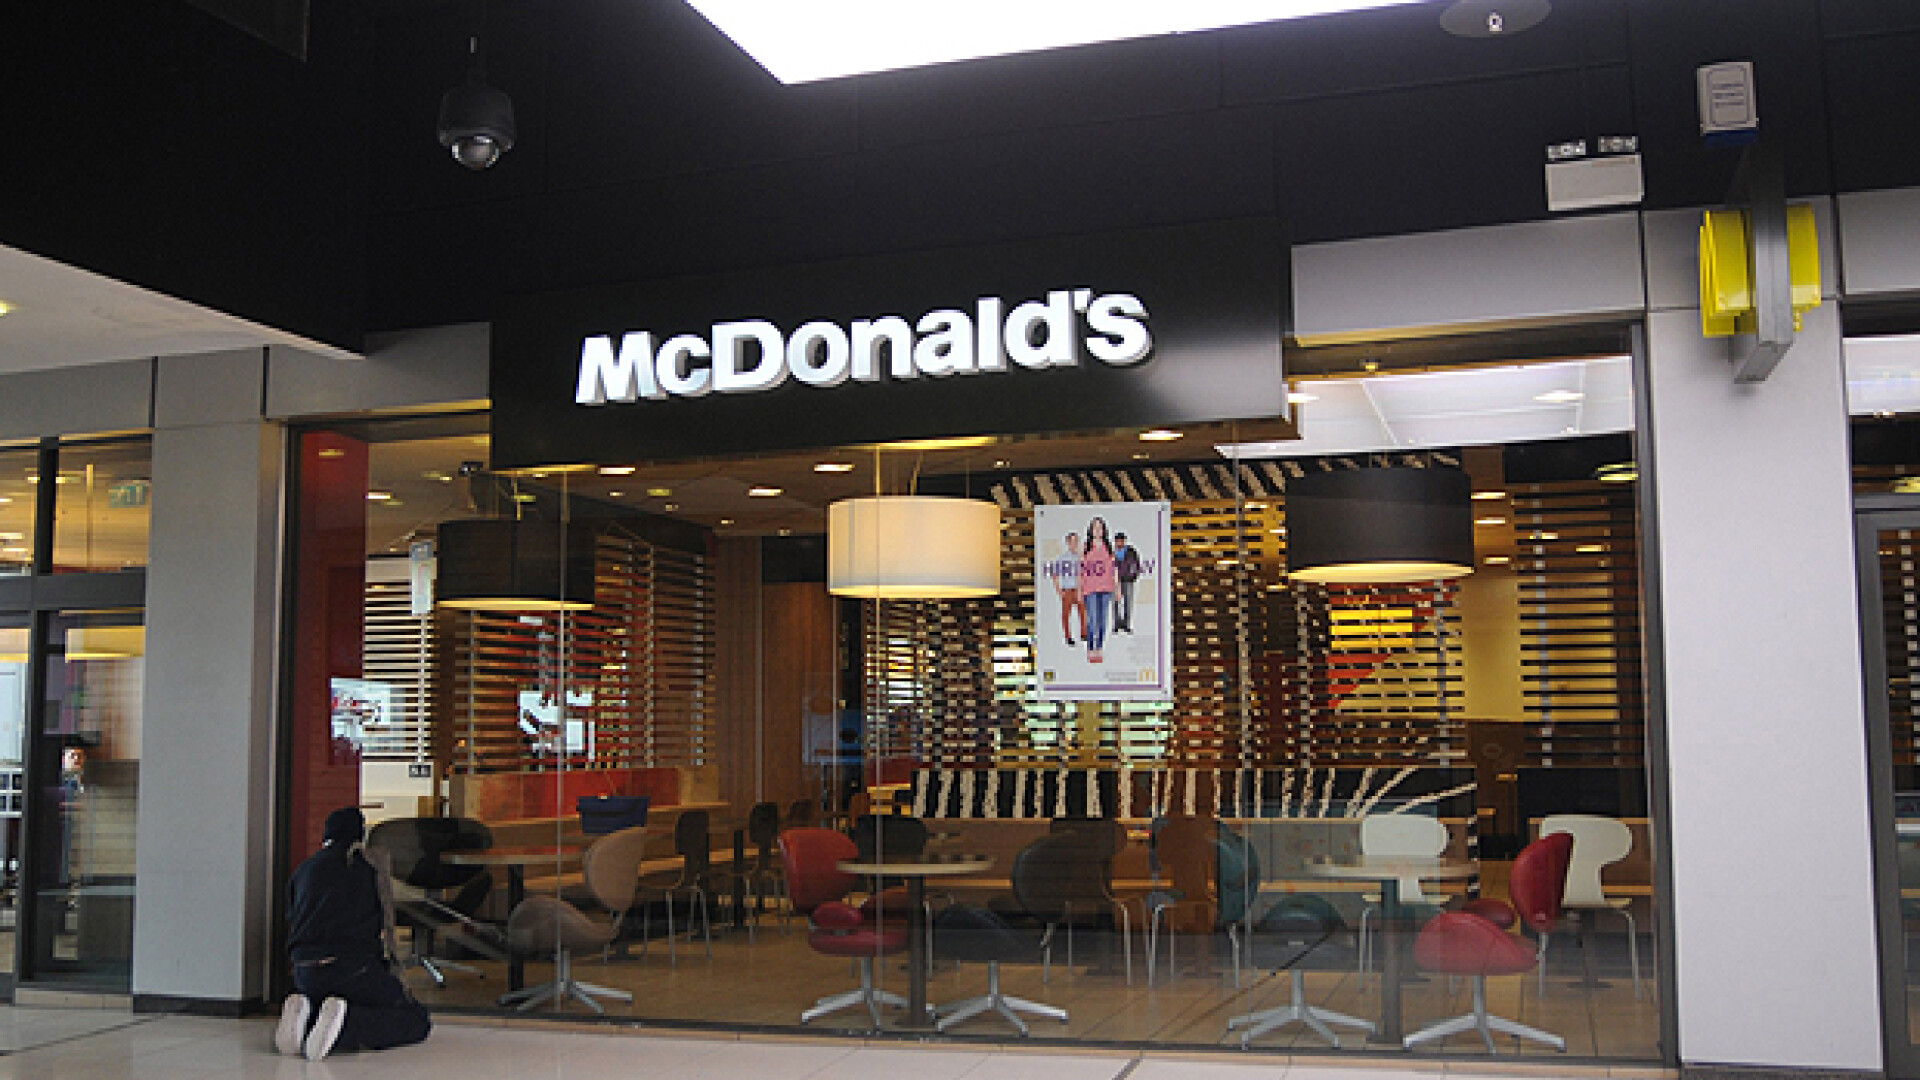 MacDonald's